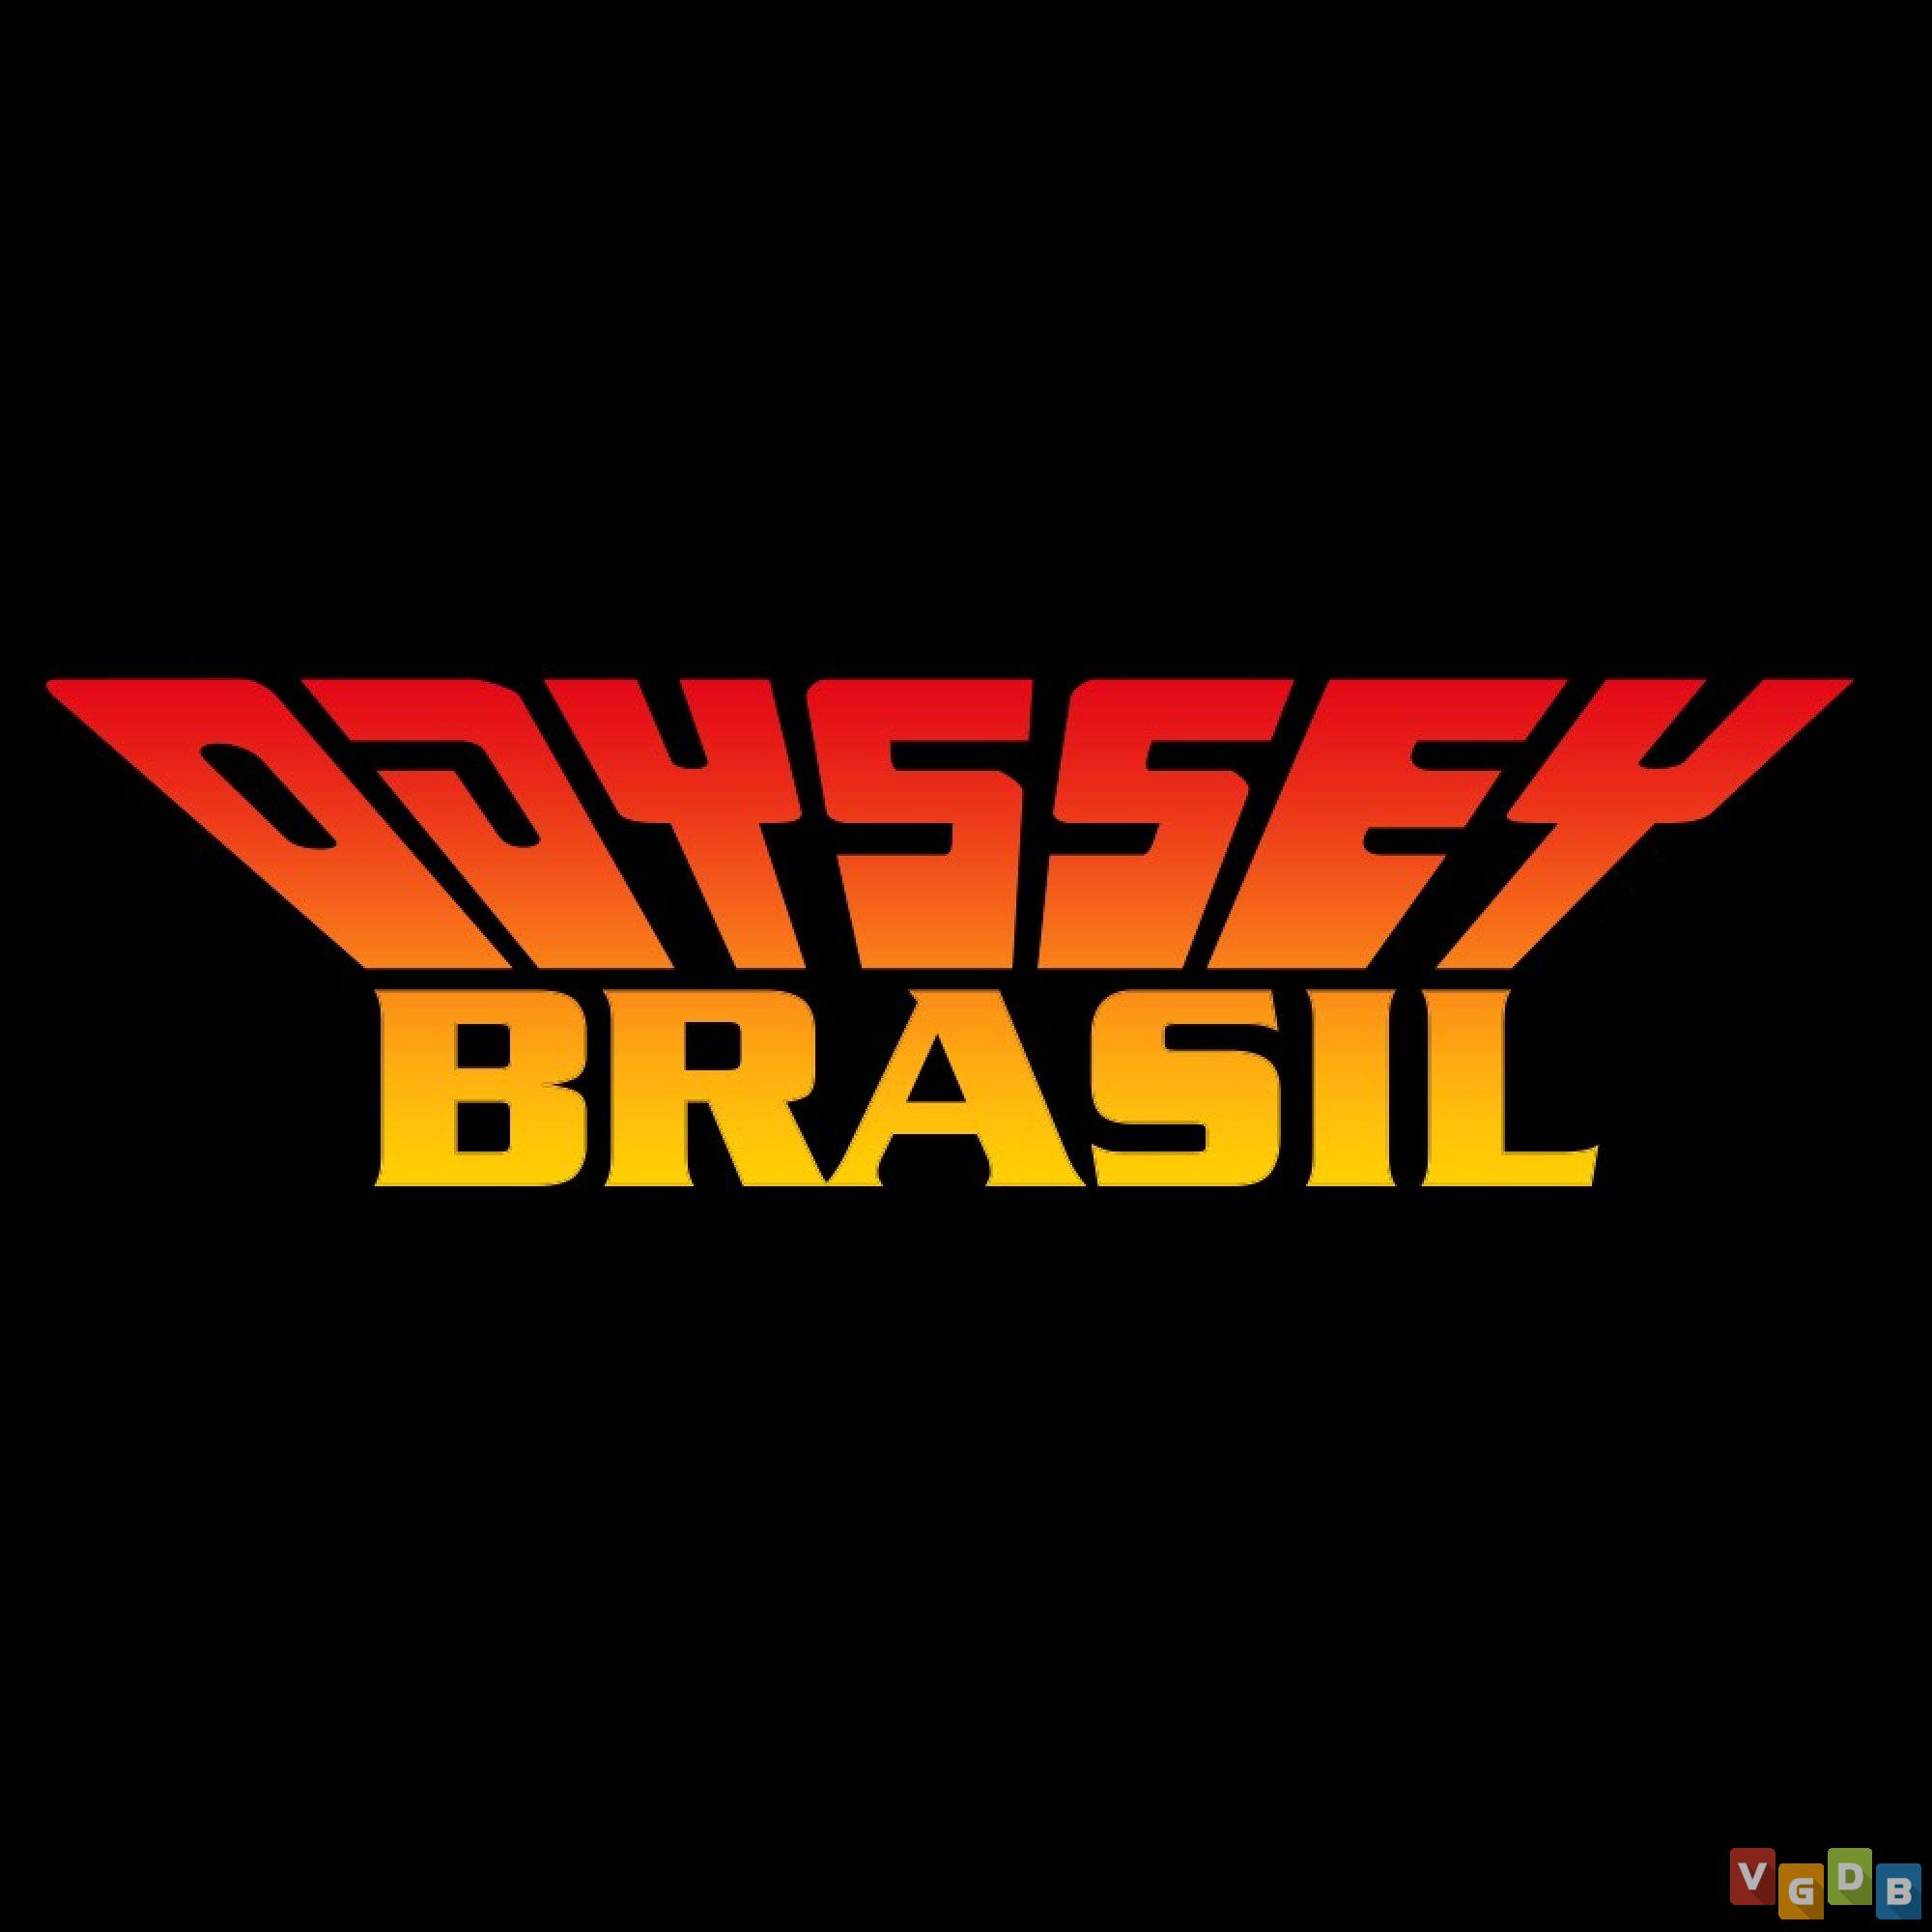 Odyssey Brasil